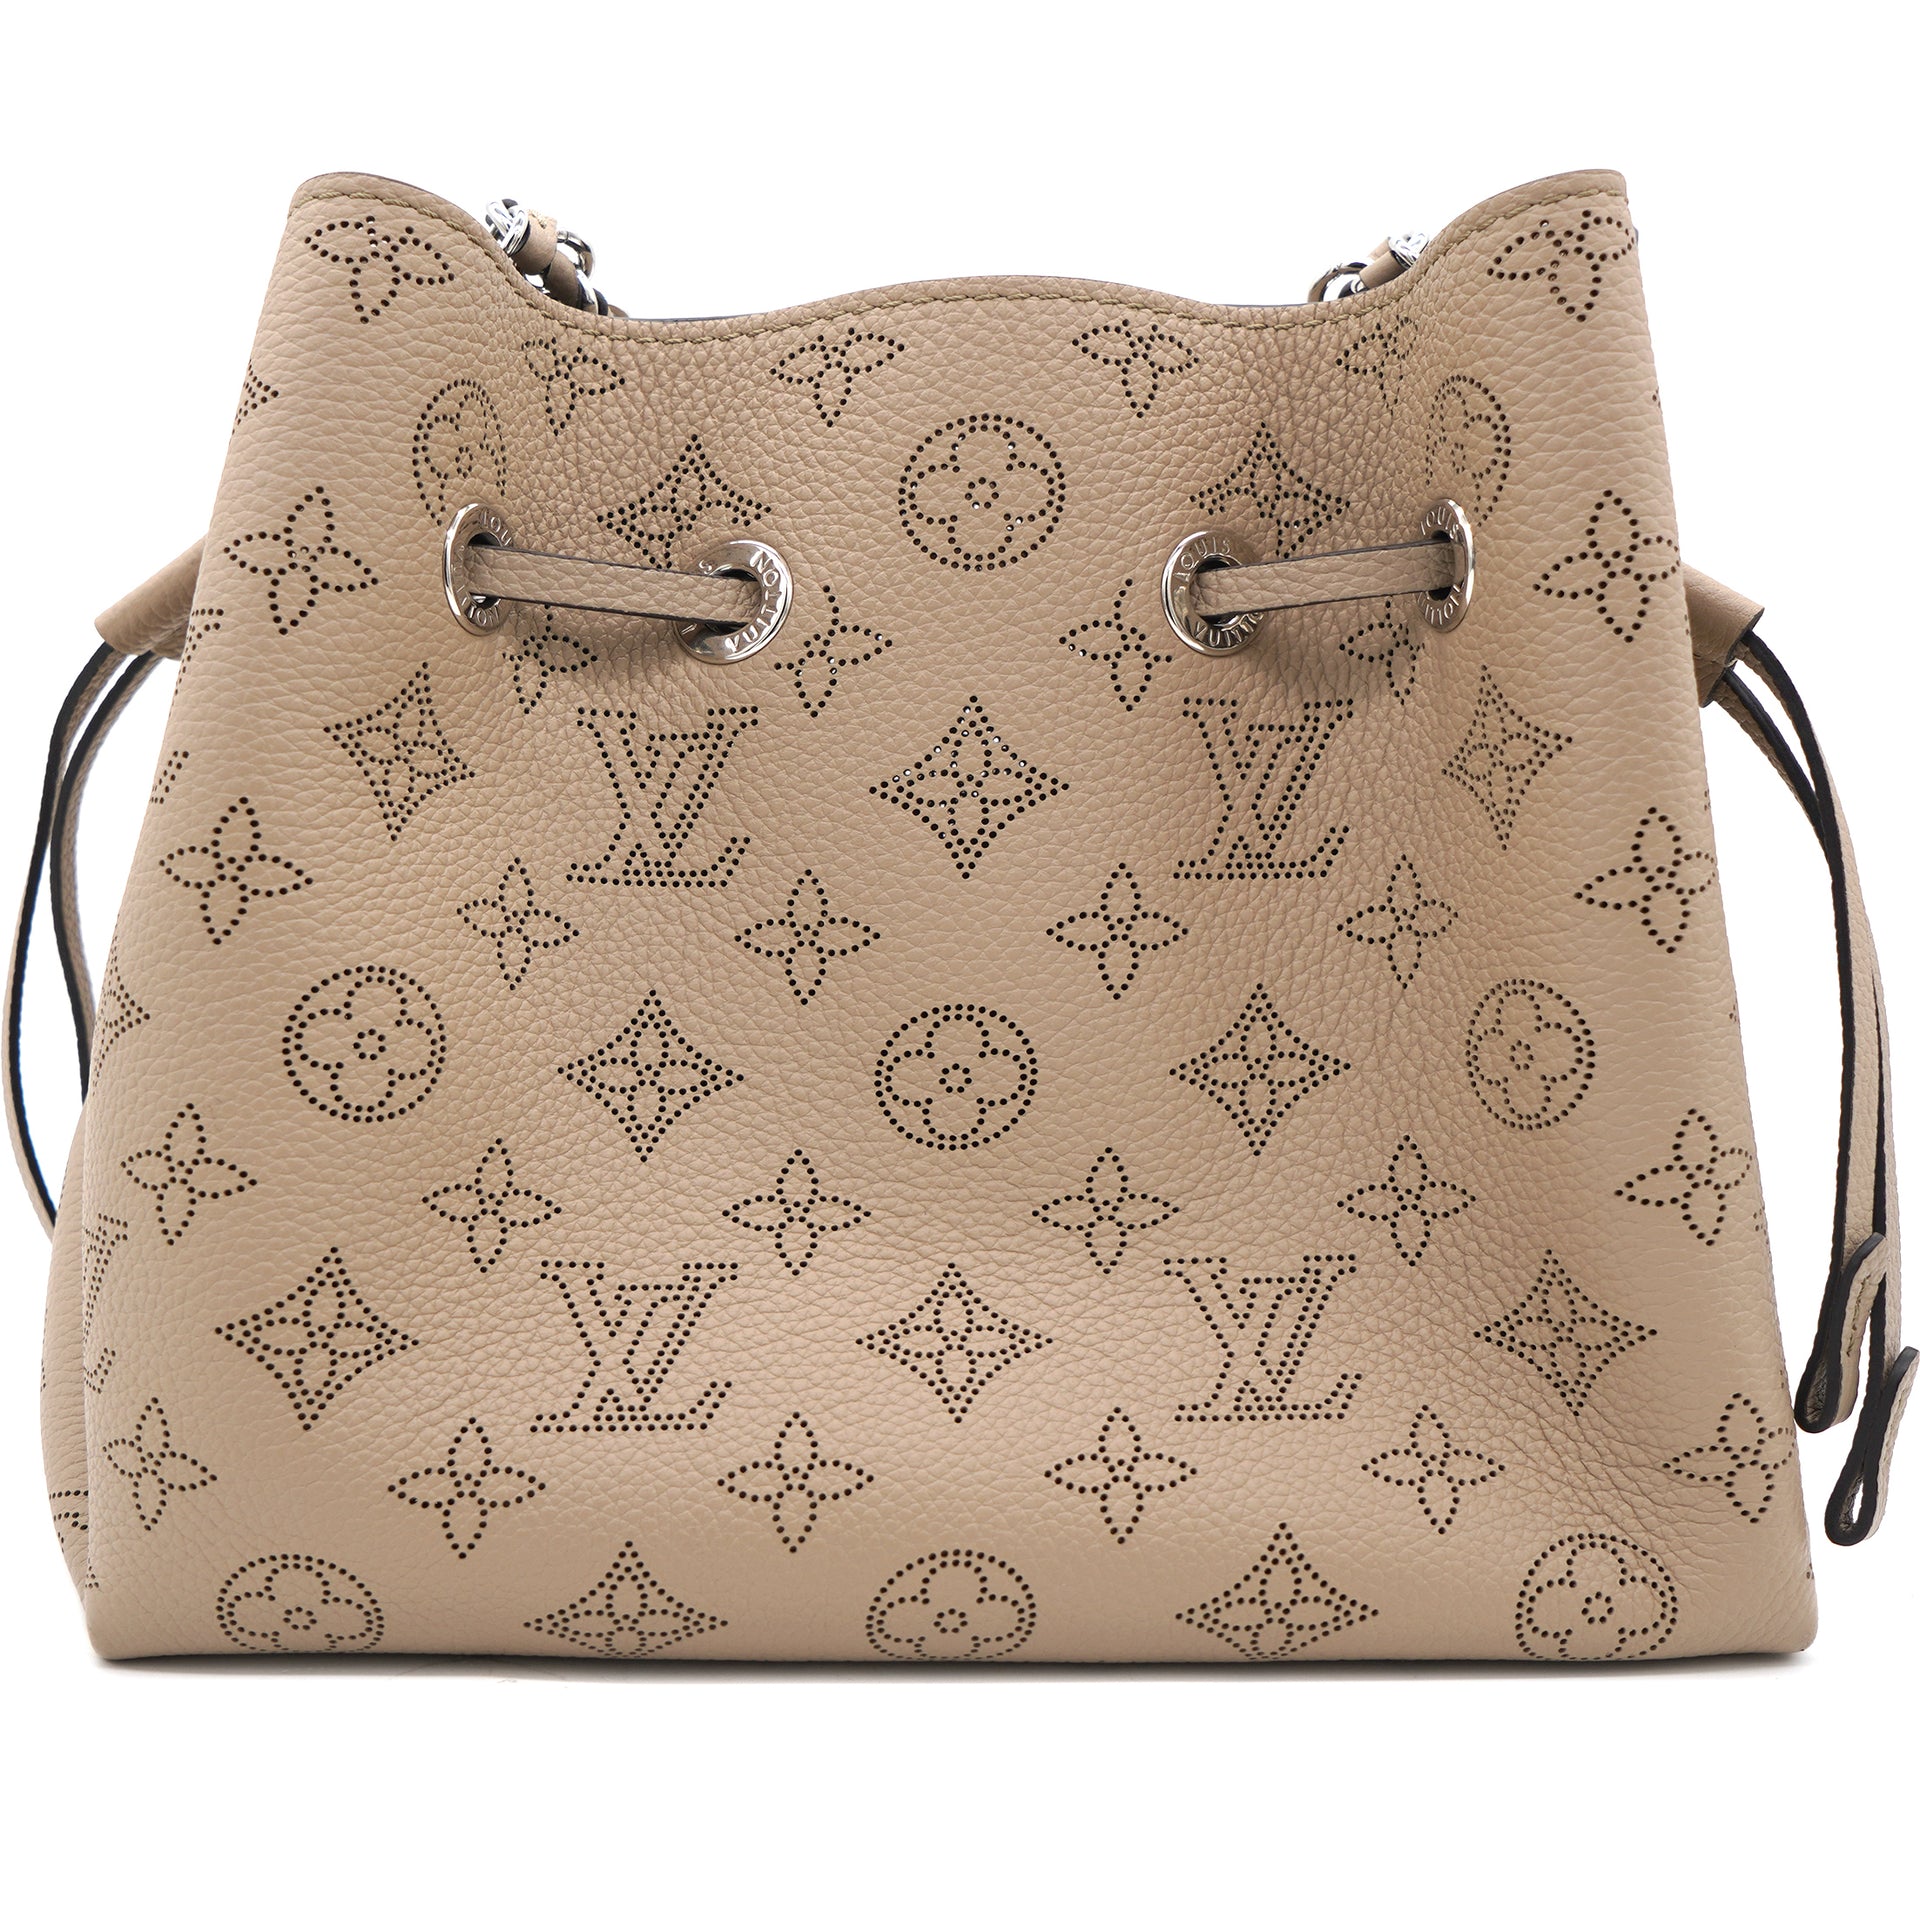 Replica Louis Vuitton M57201 Bella Bucket Bag in Mahina Calf Leather wite  Perforated Monogram Pattern Galet